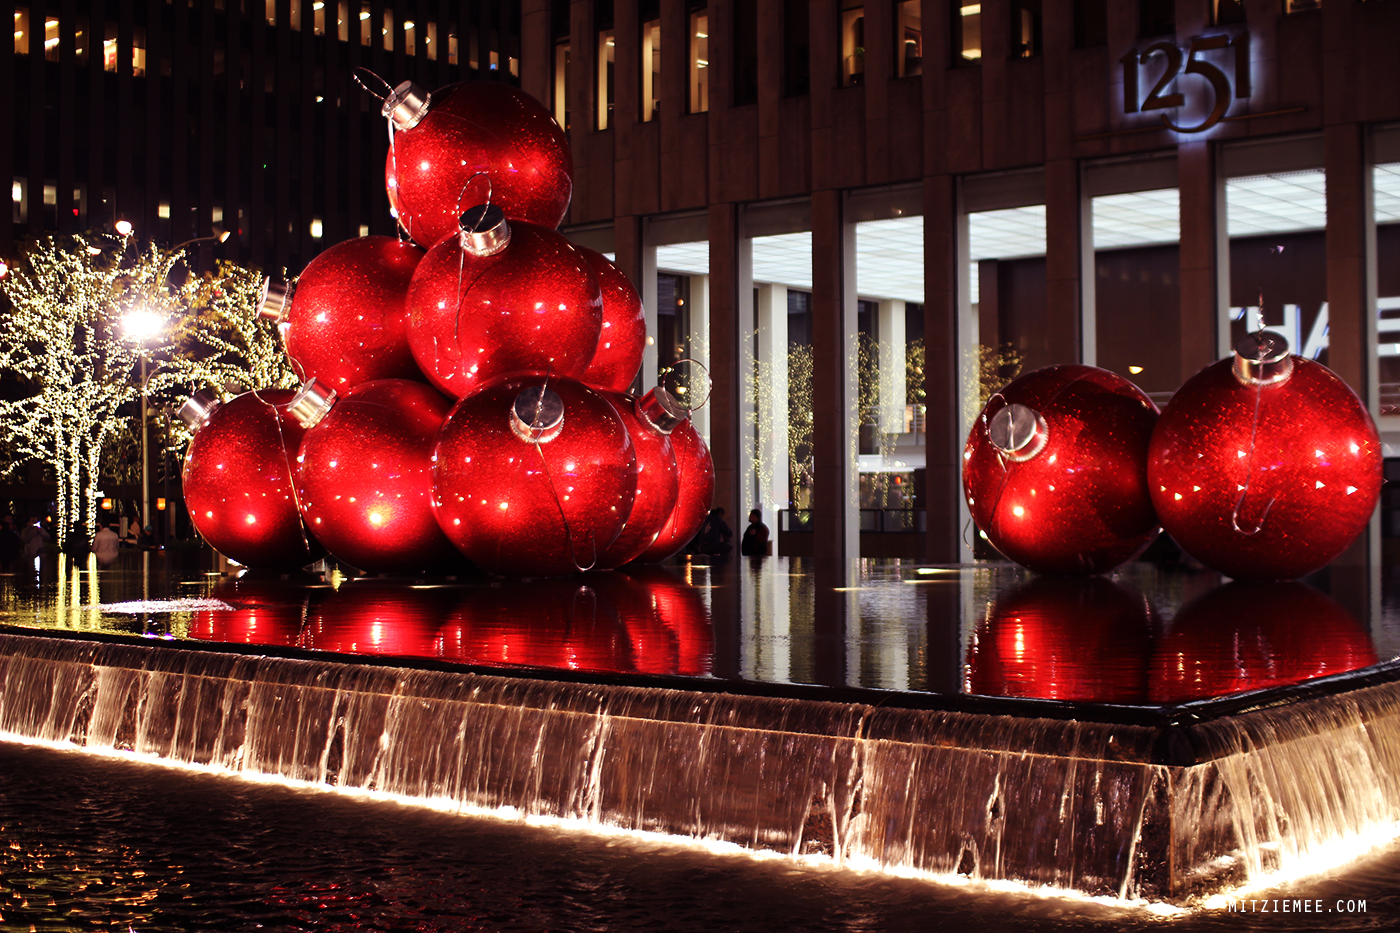 Giant Christmas ornaments 6th Avenue New York